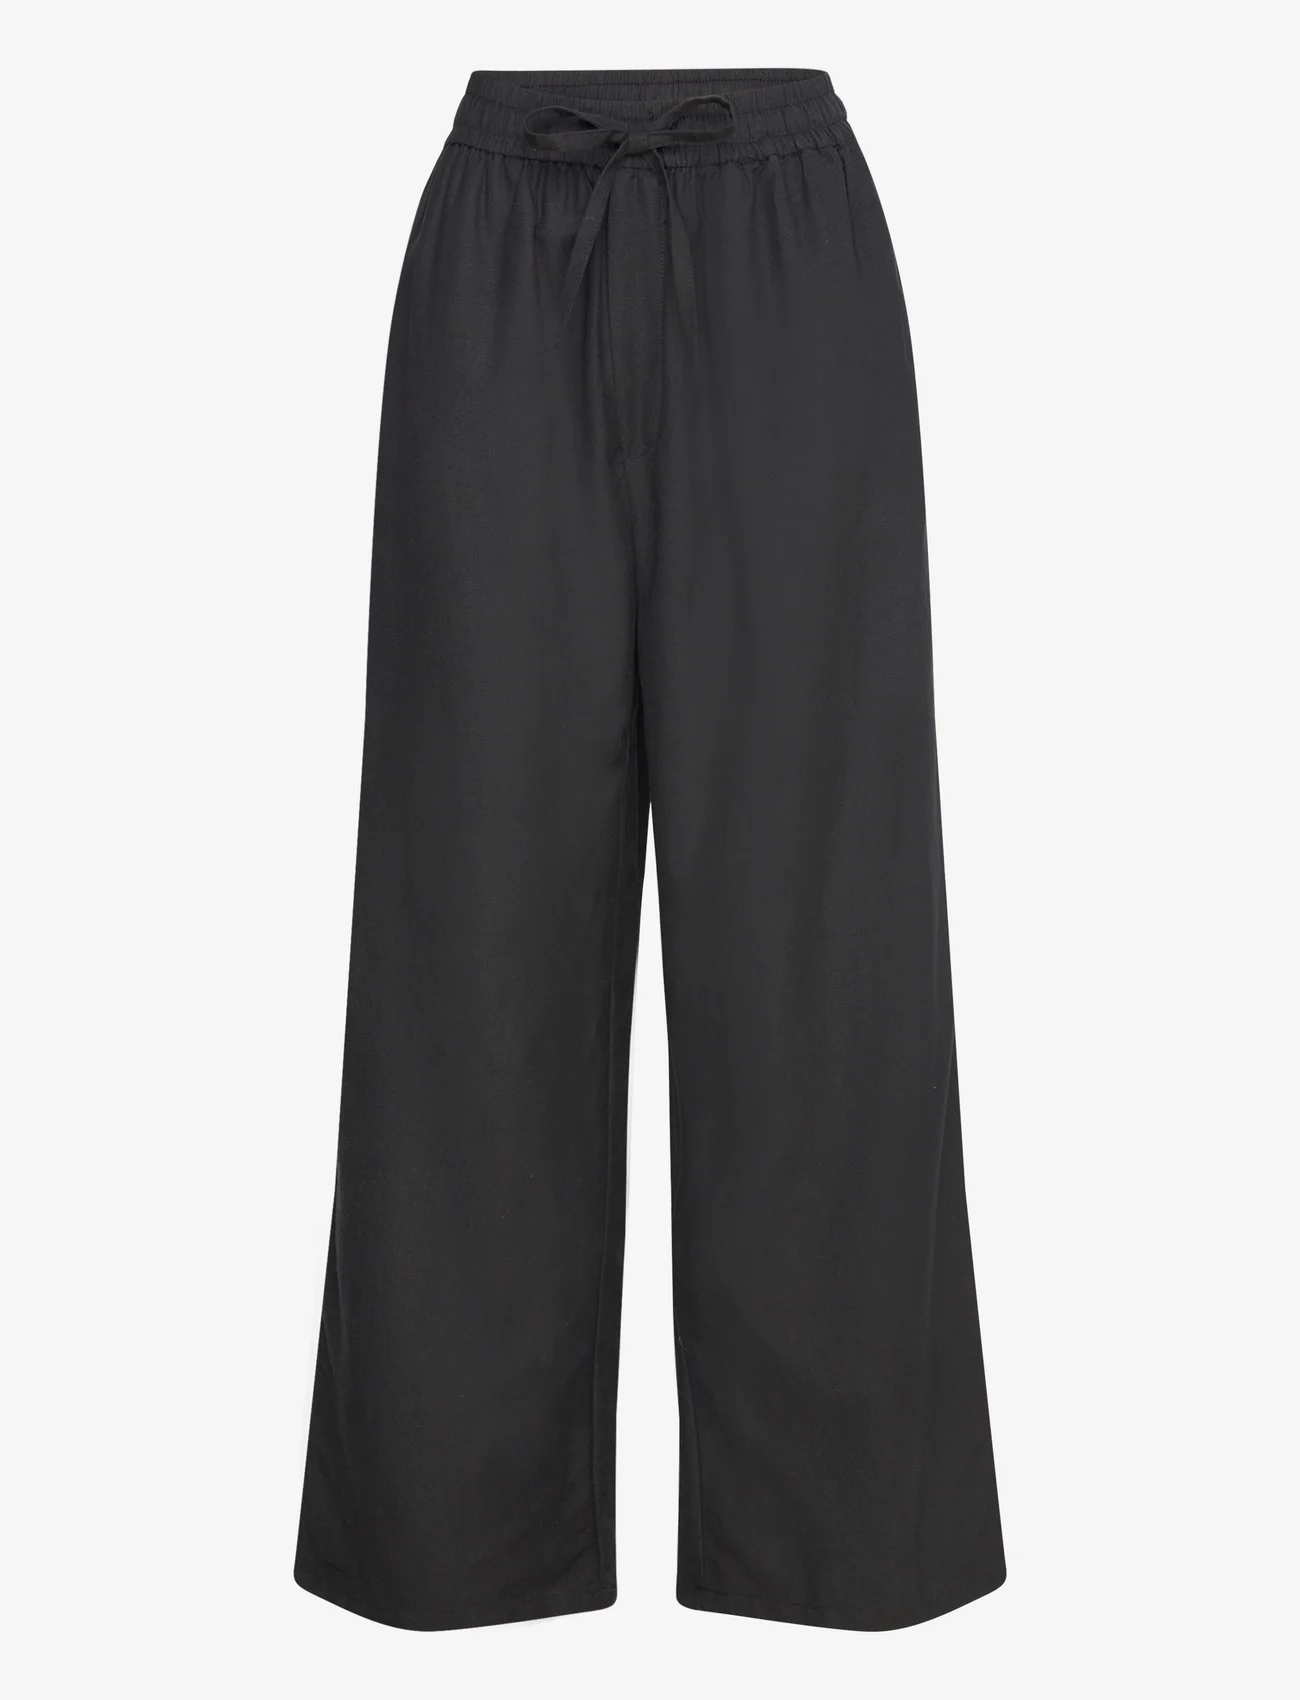 Movesgood - Lovisa Trousers - linen trousers - black - 0